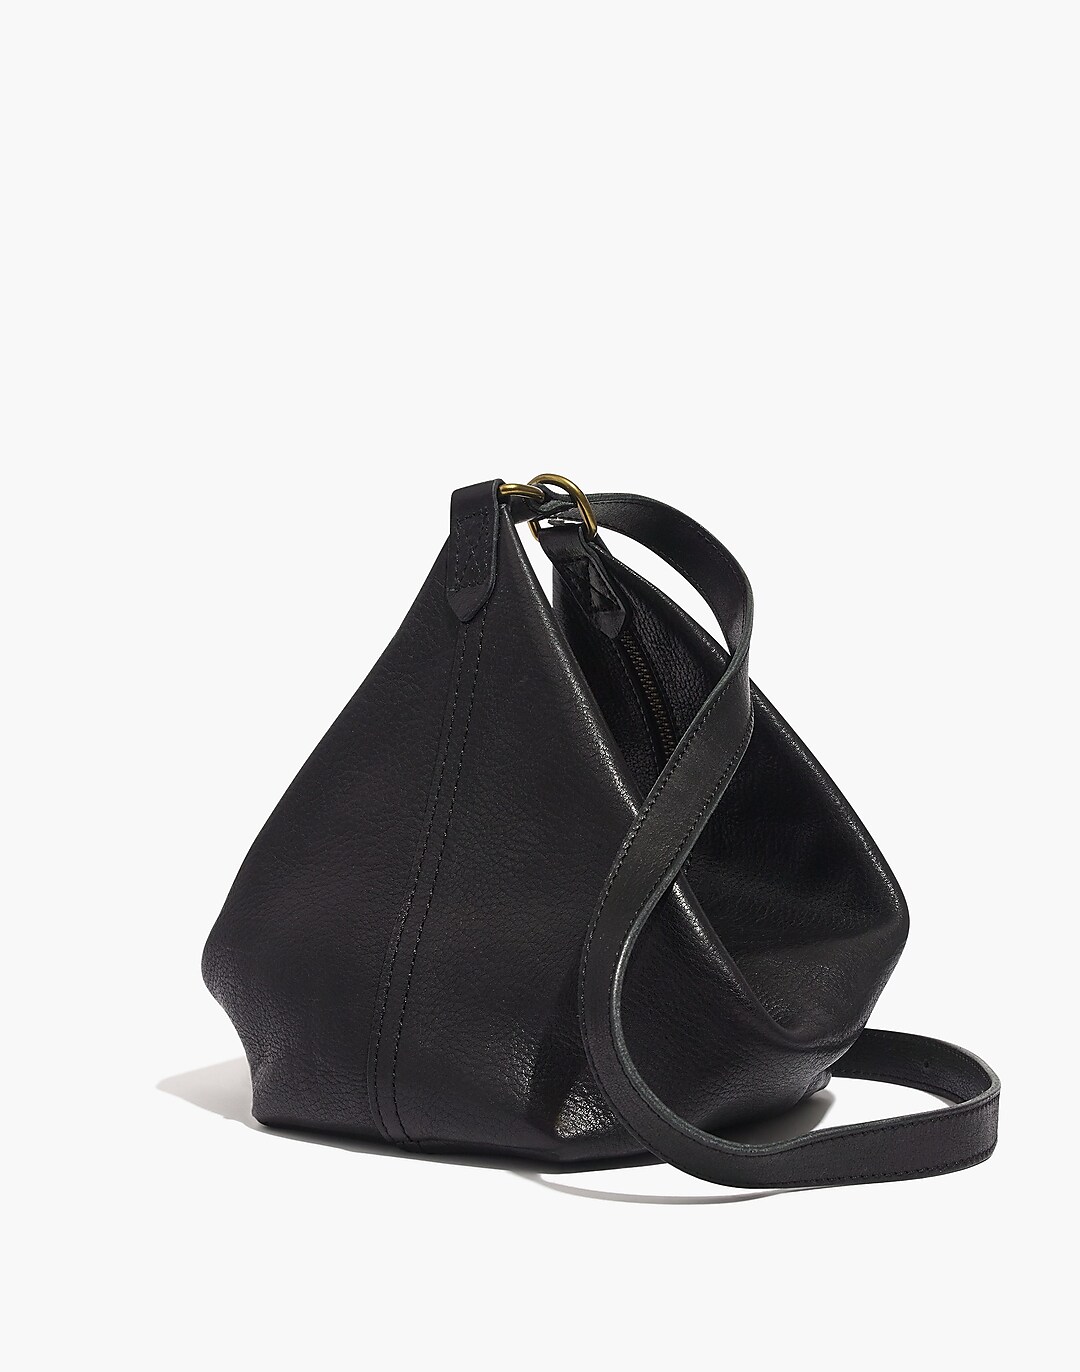 Wholesale Women Sling Bags Leather Buy 1 Get 3 Shoulder Tote